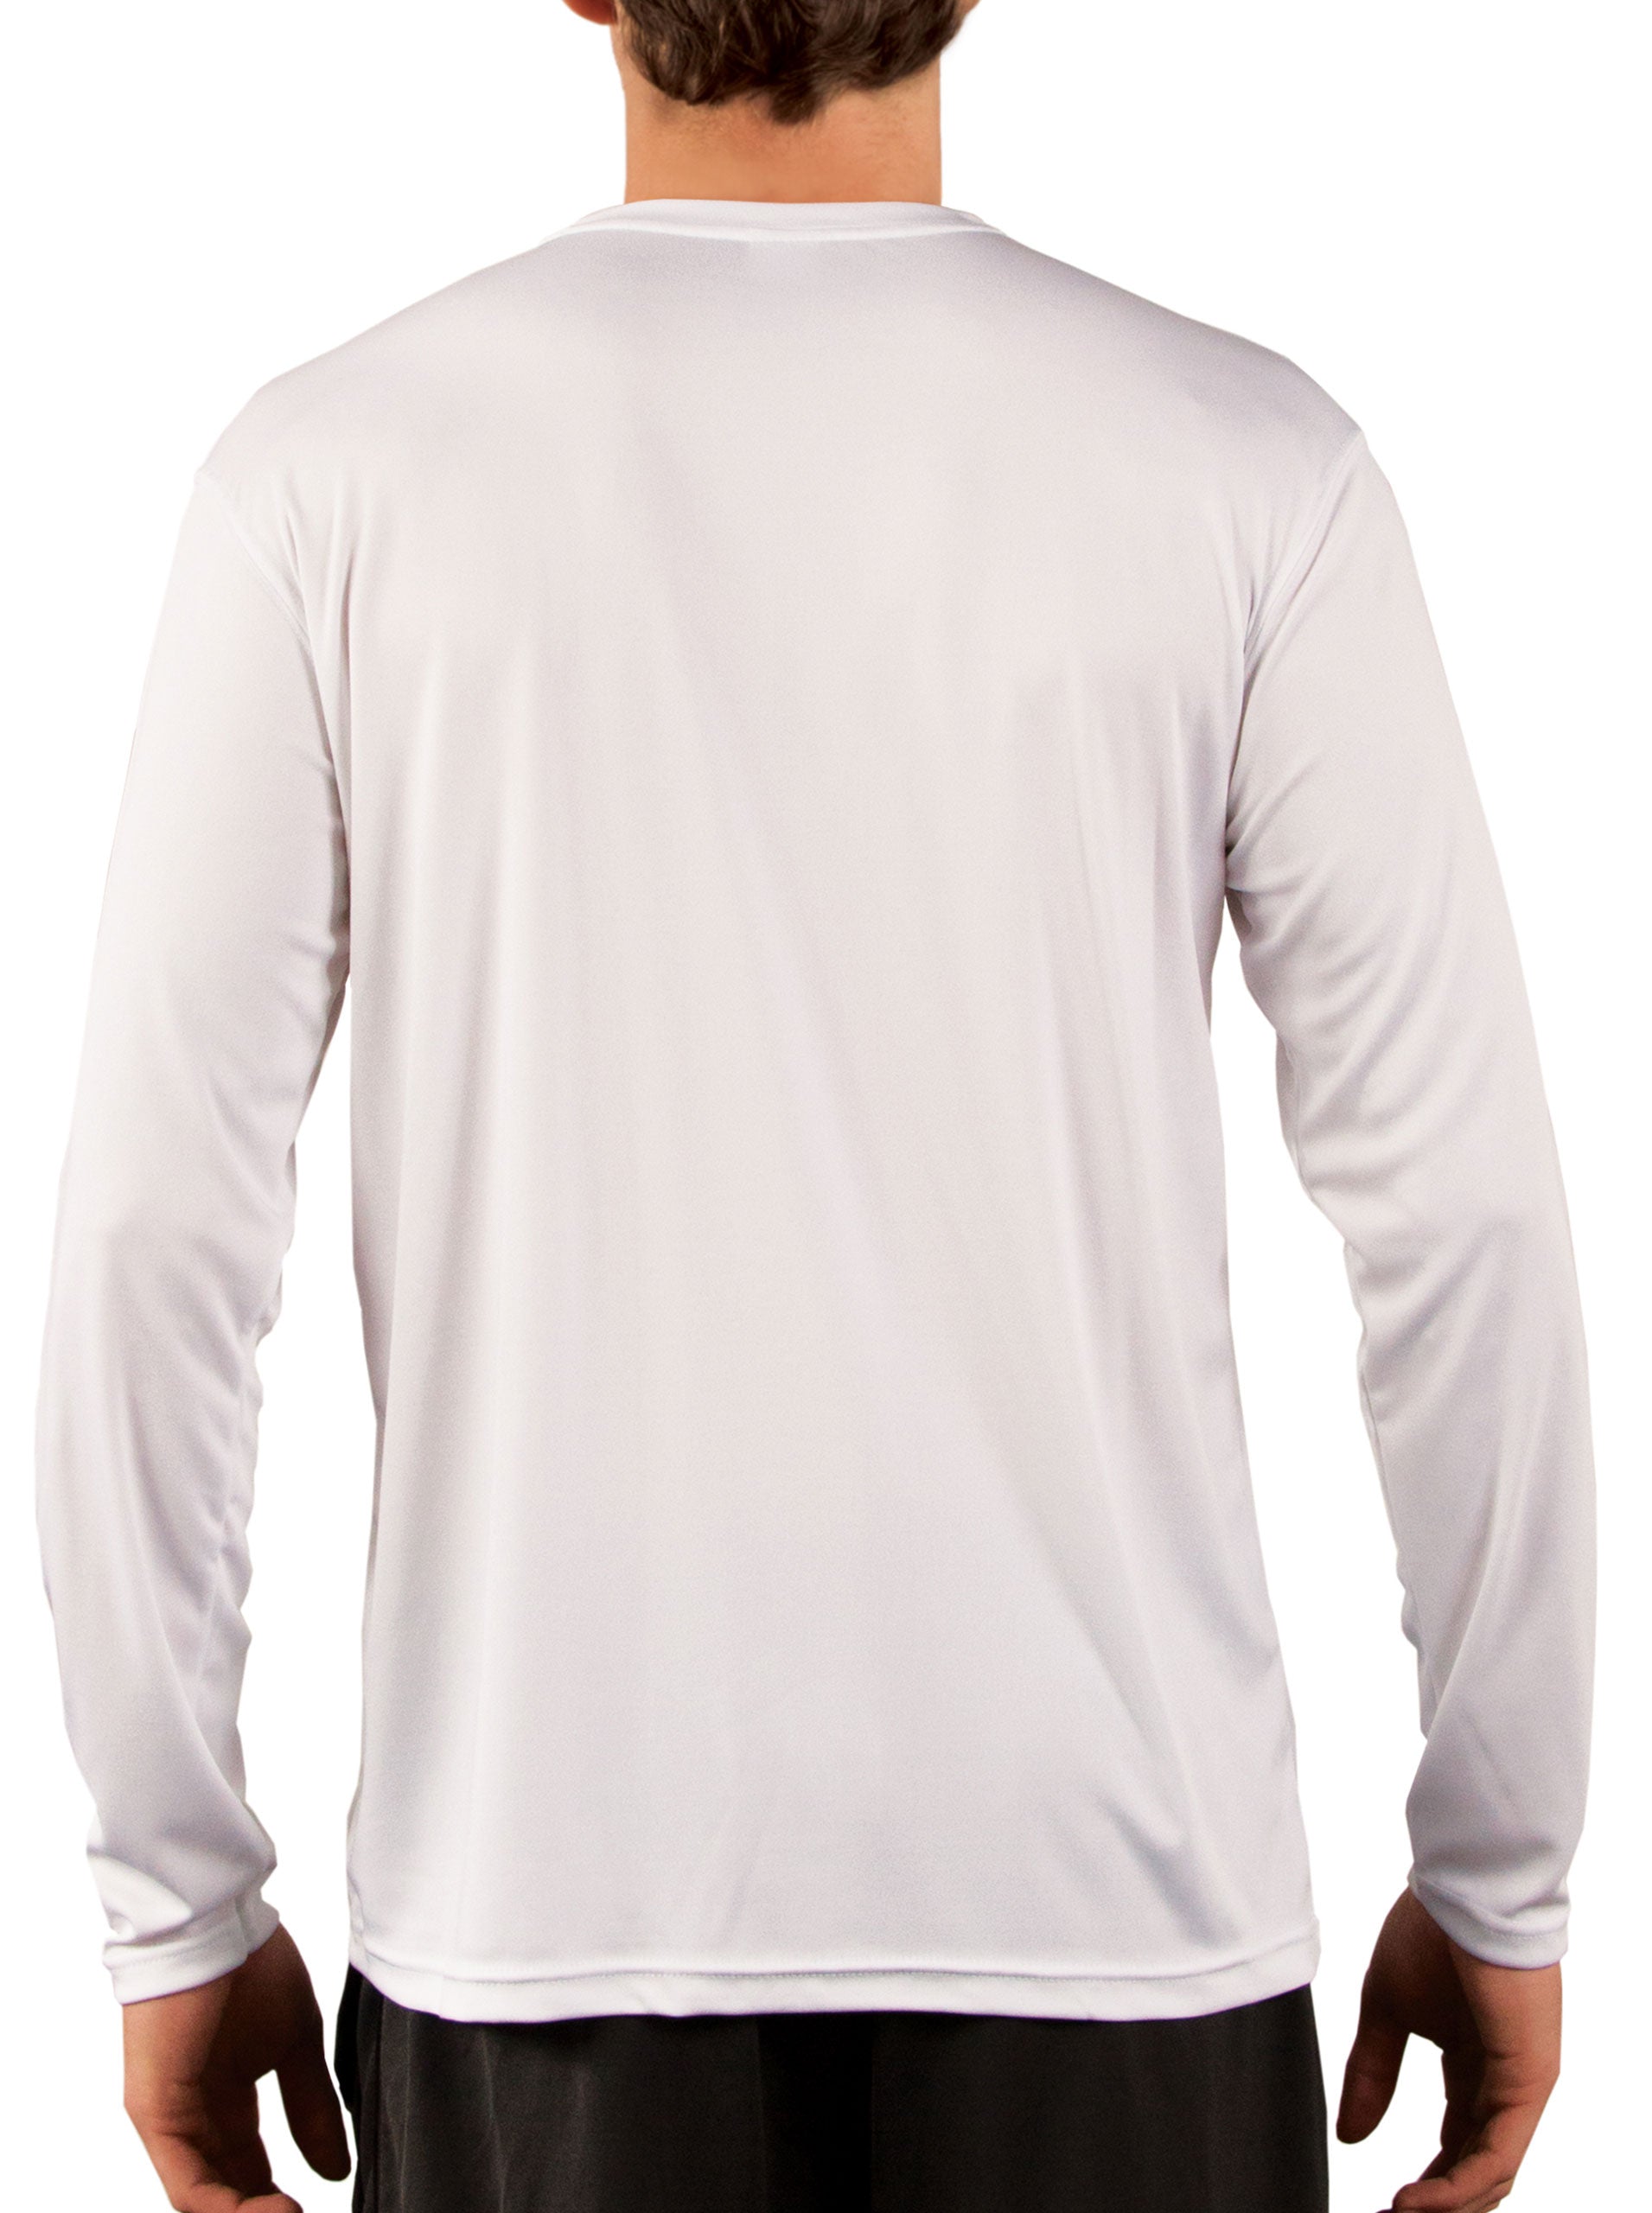 Fishing Shirts Men's Quick Dry Lightweight UPF 50+ Long Sleeve Shirts –  Skiff Life